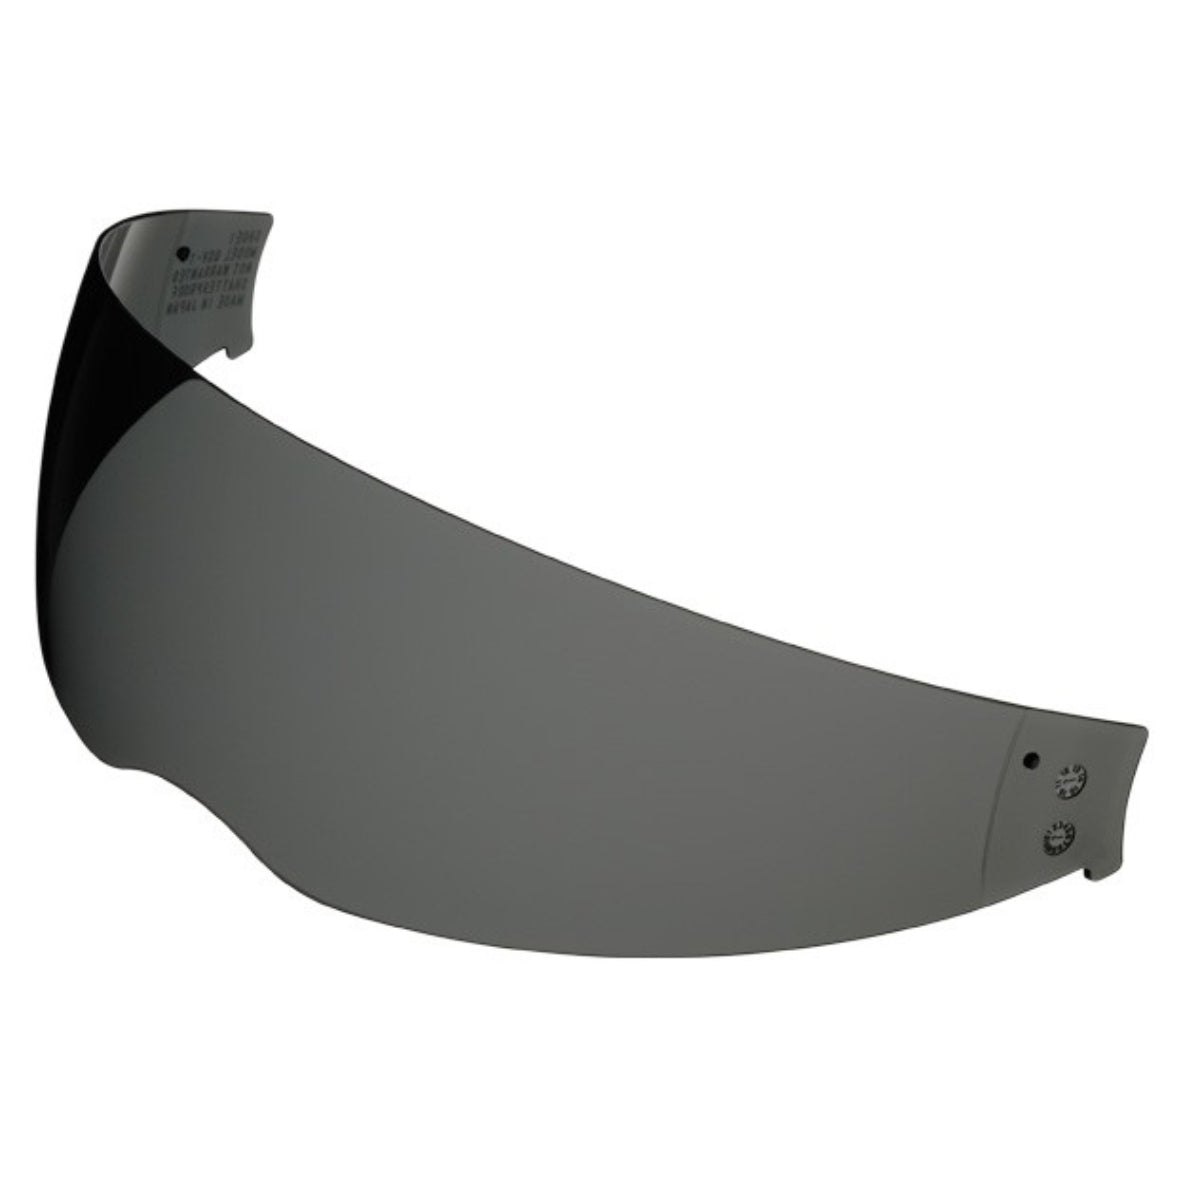 Genuine Shoei Helmets replacement visor for Shoei Models GT Air Neotec